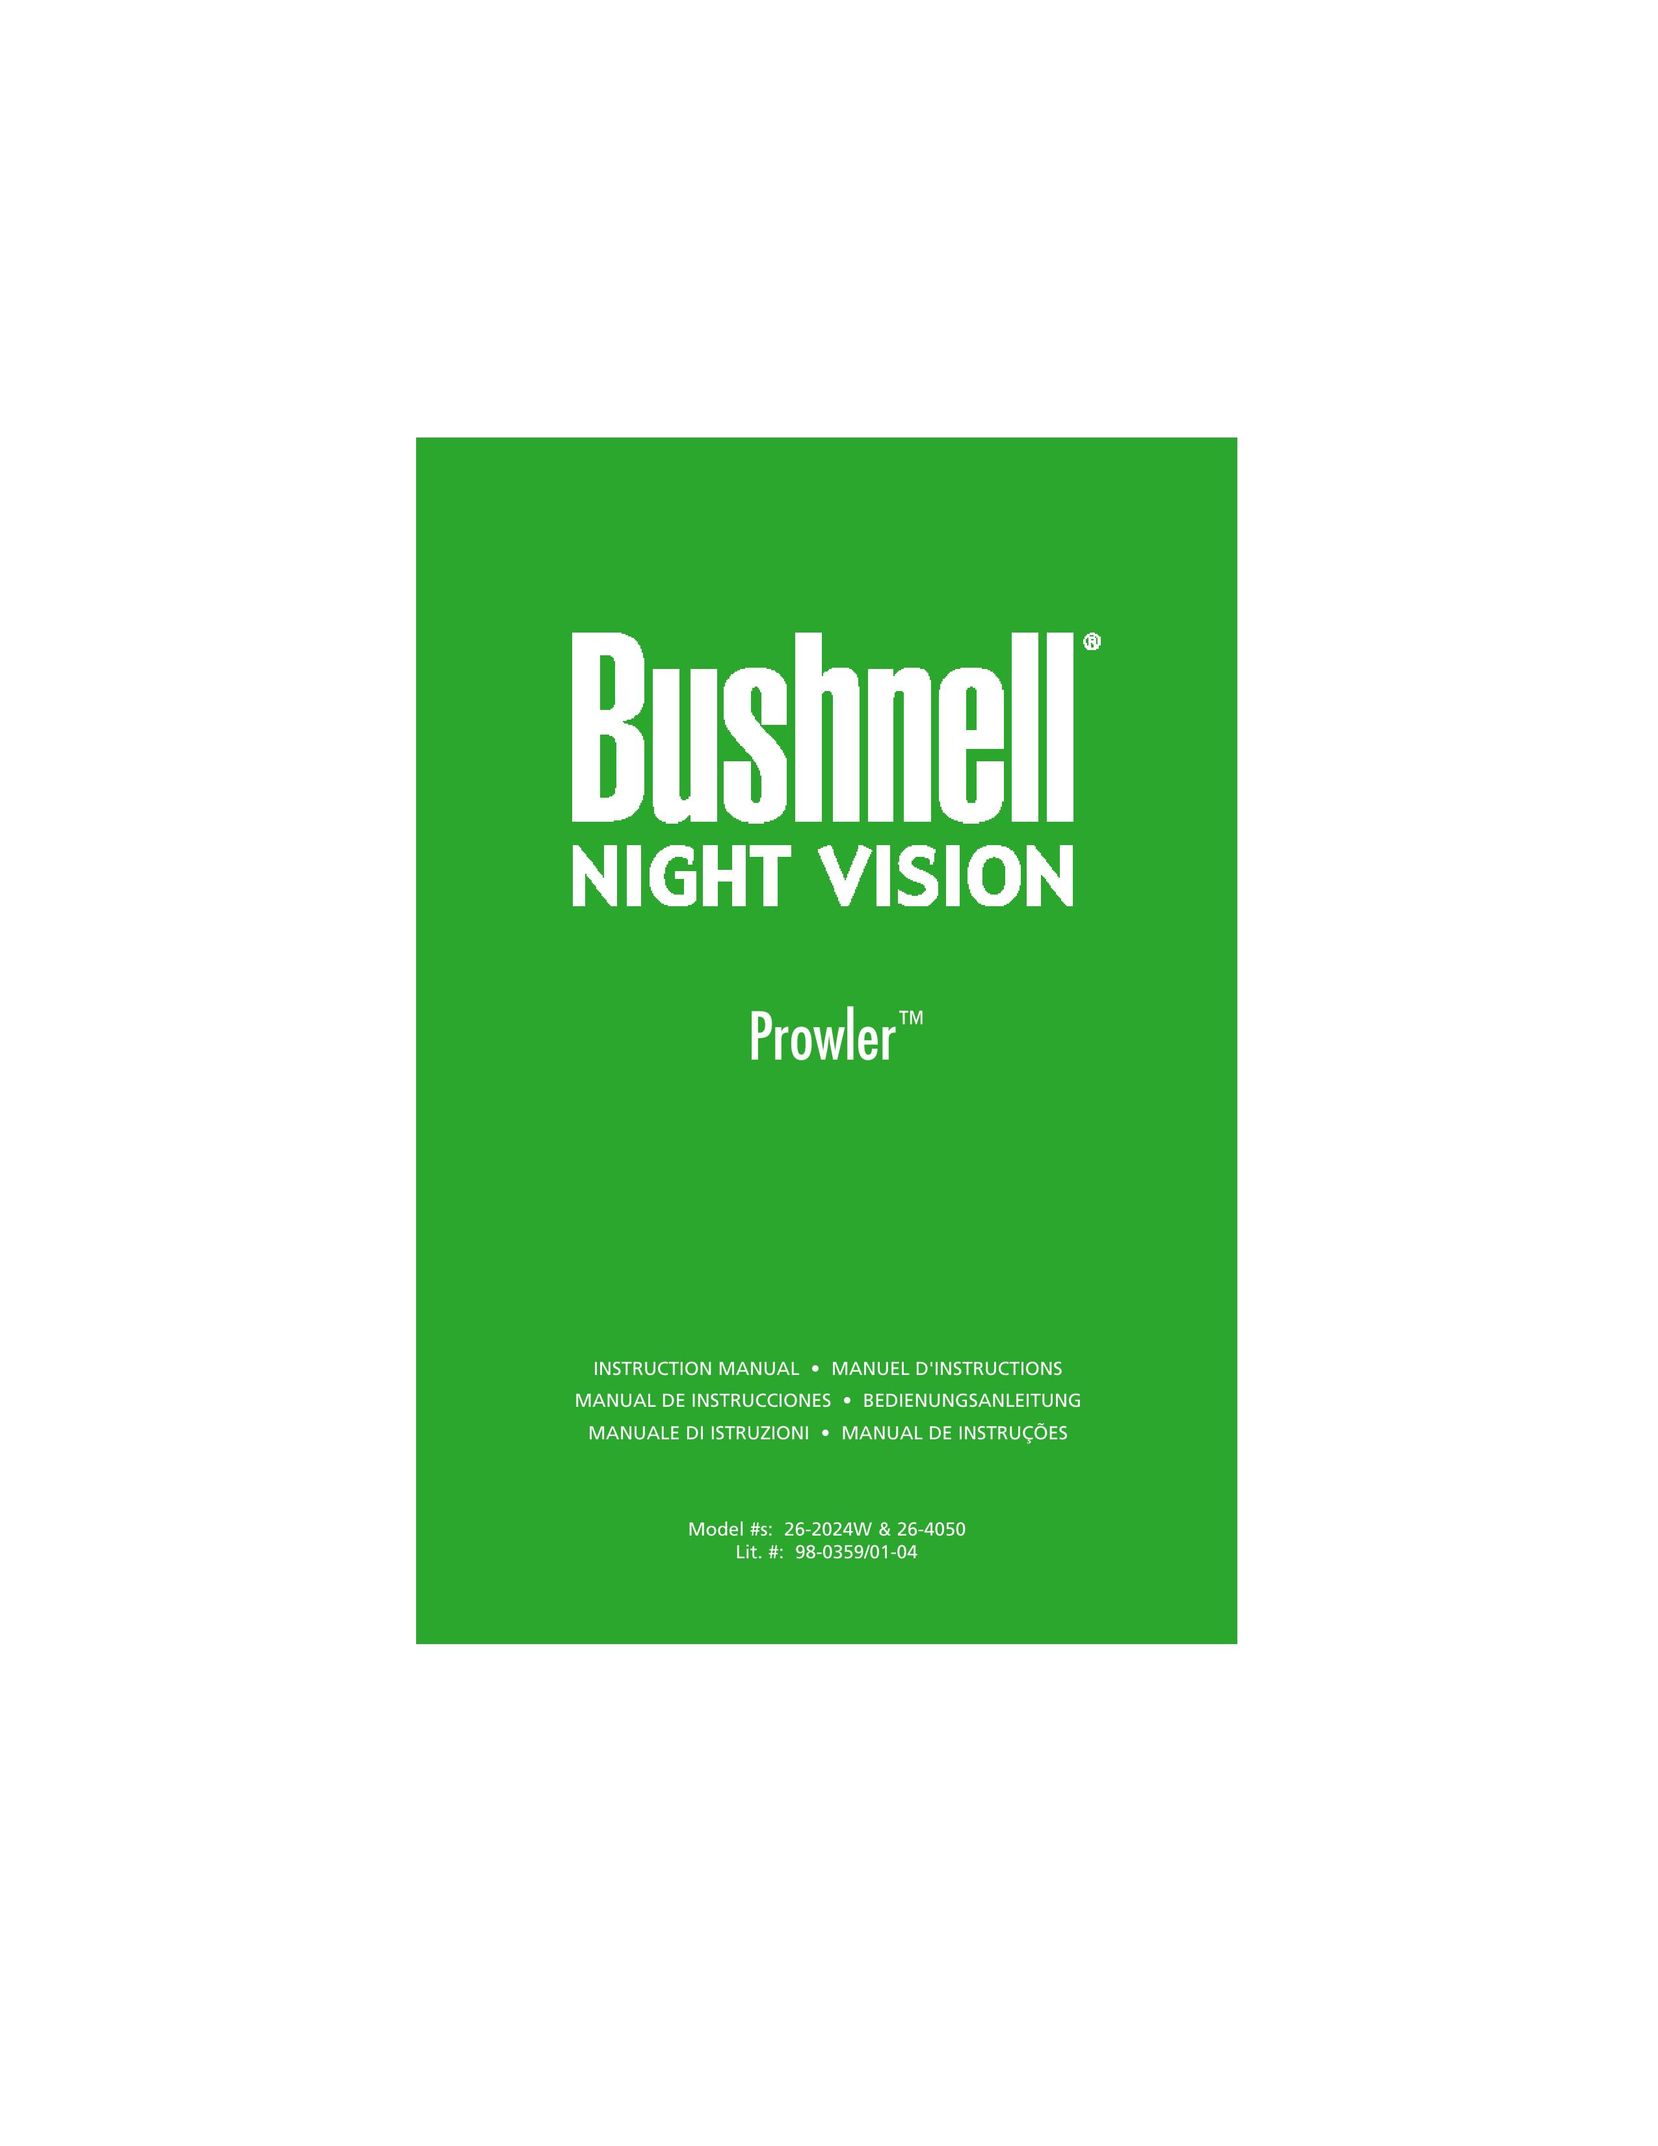 Bushnell 26-4050 Appliance Trim Kit User Manual